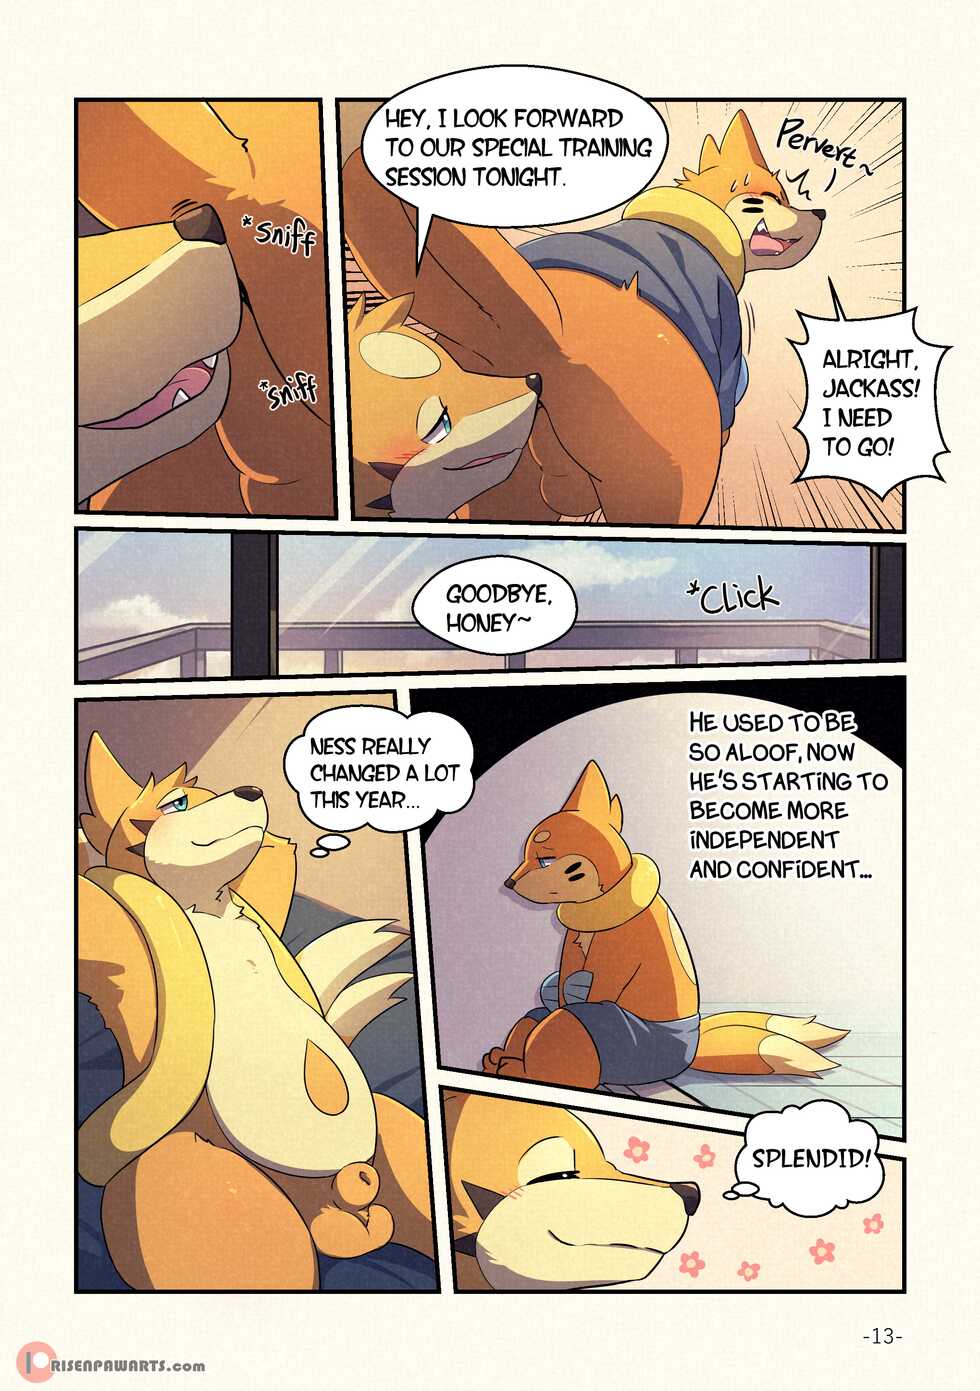 [RisenPaw] The Fulll Moon Part 2 (Pokemon) (In progress) - Page 11